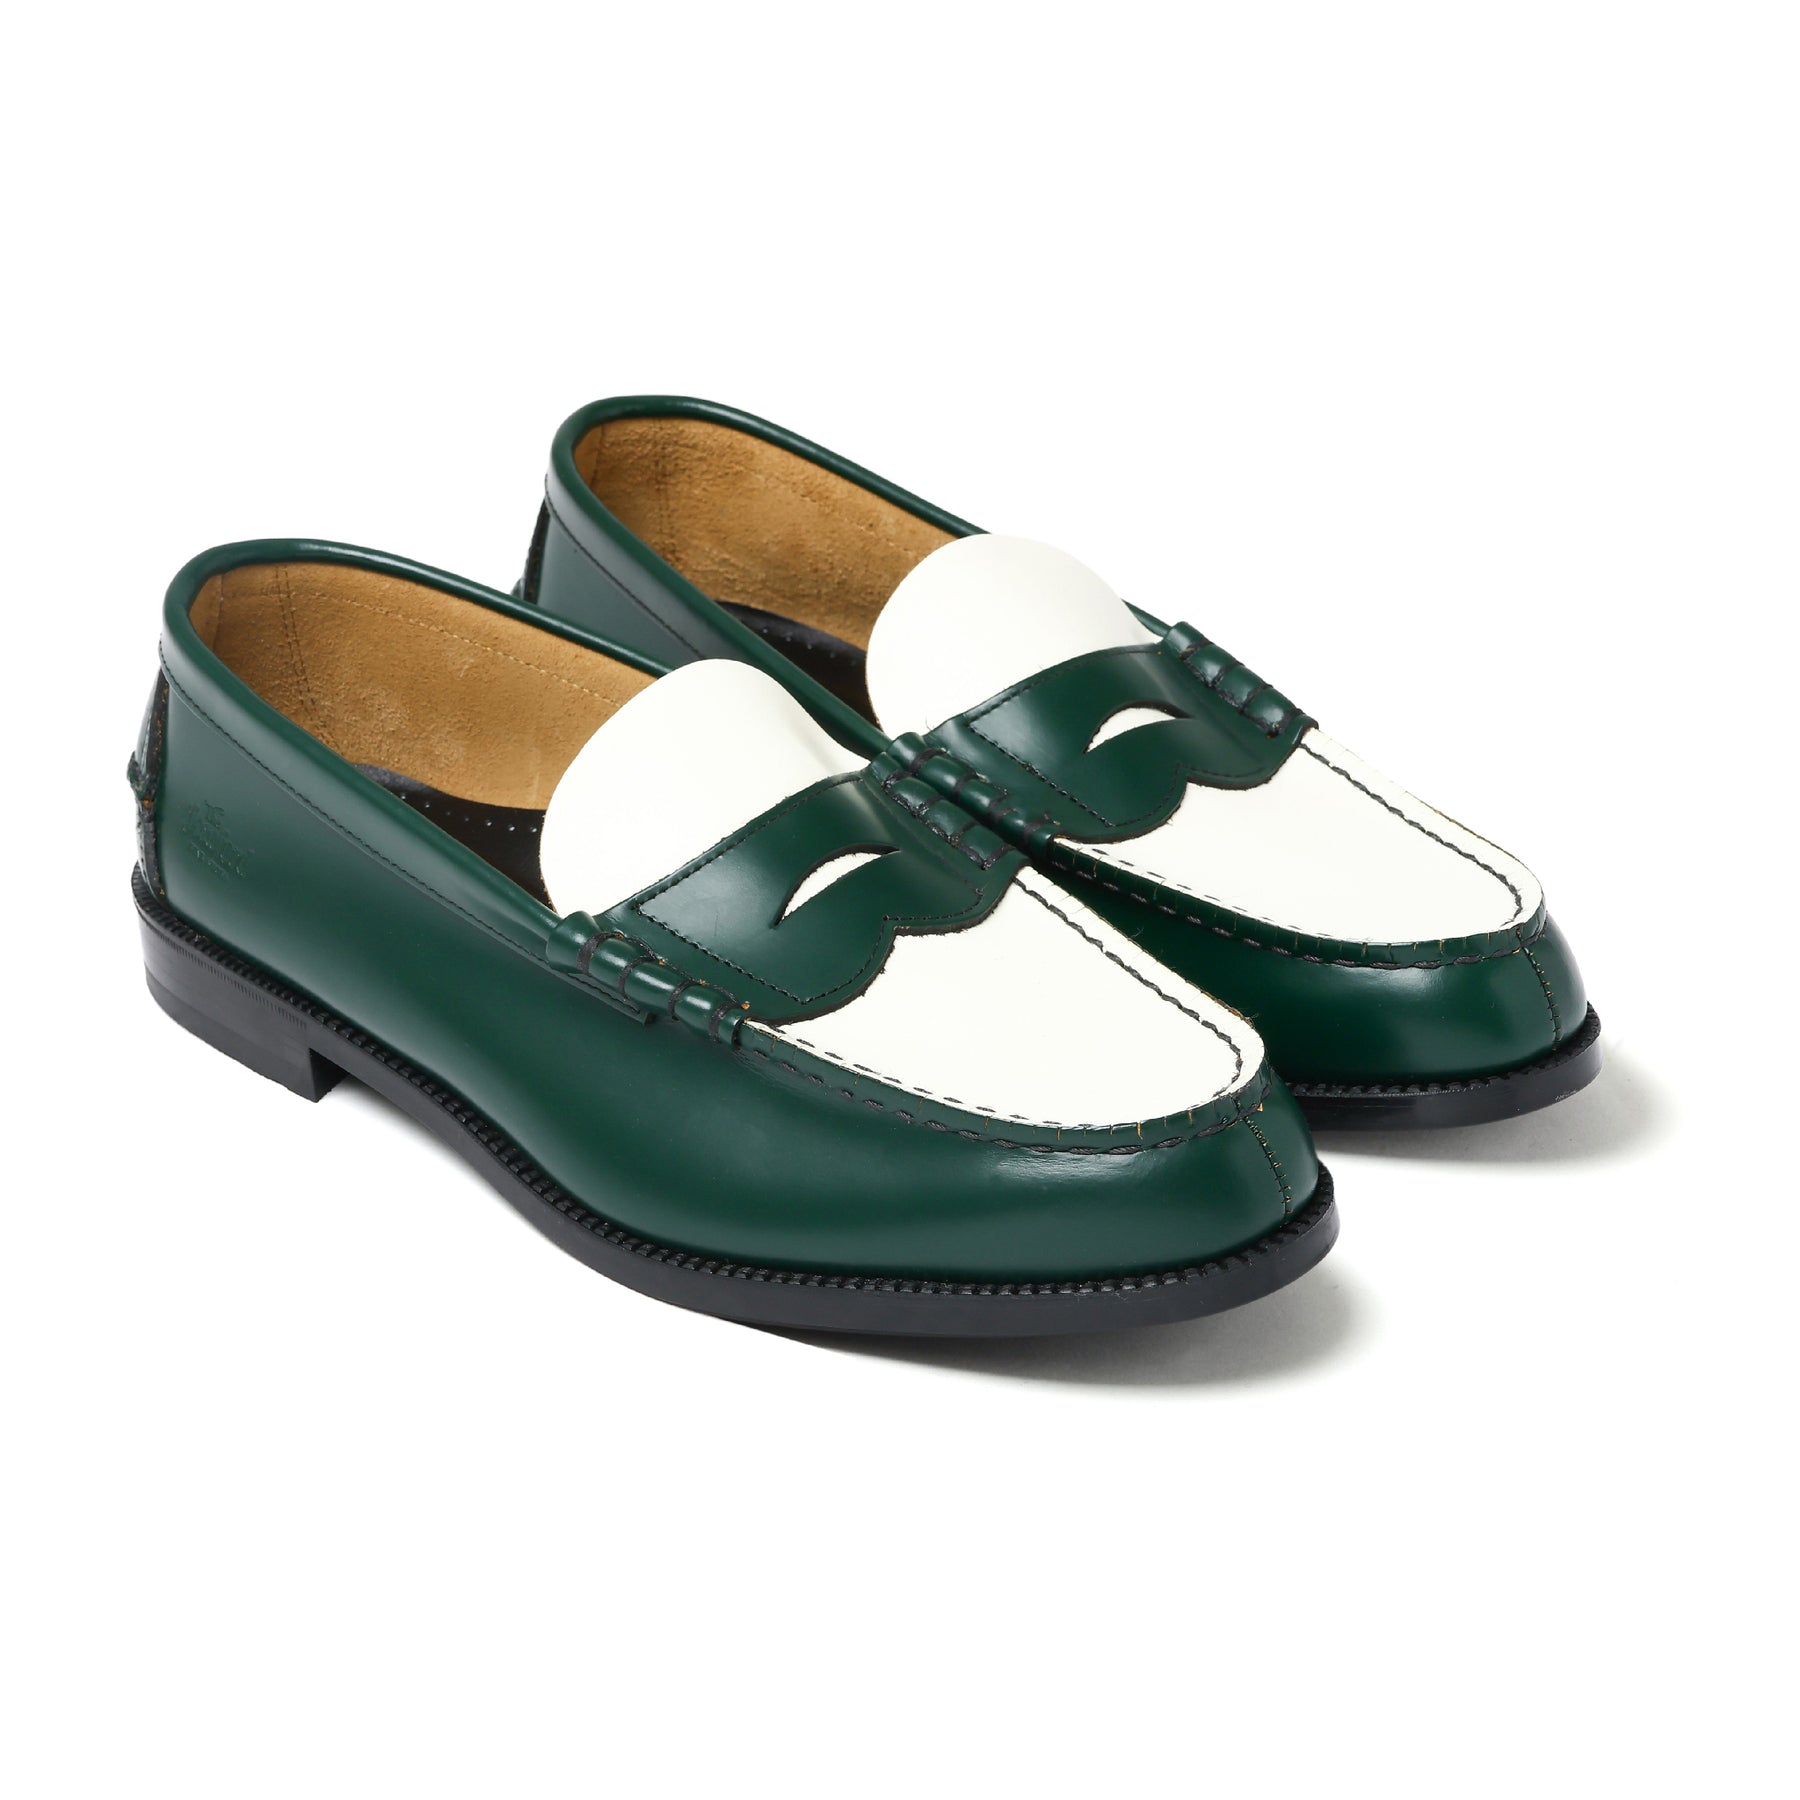 Kenford(ケンフォード) The kenford fine shoes - 靴